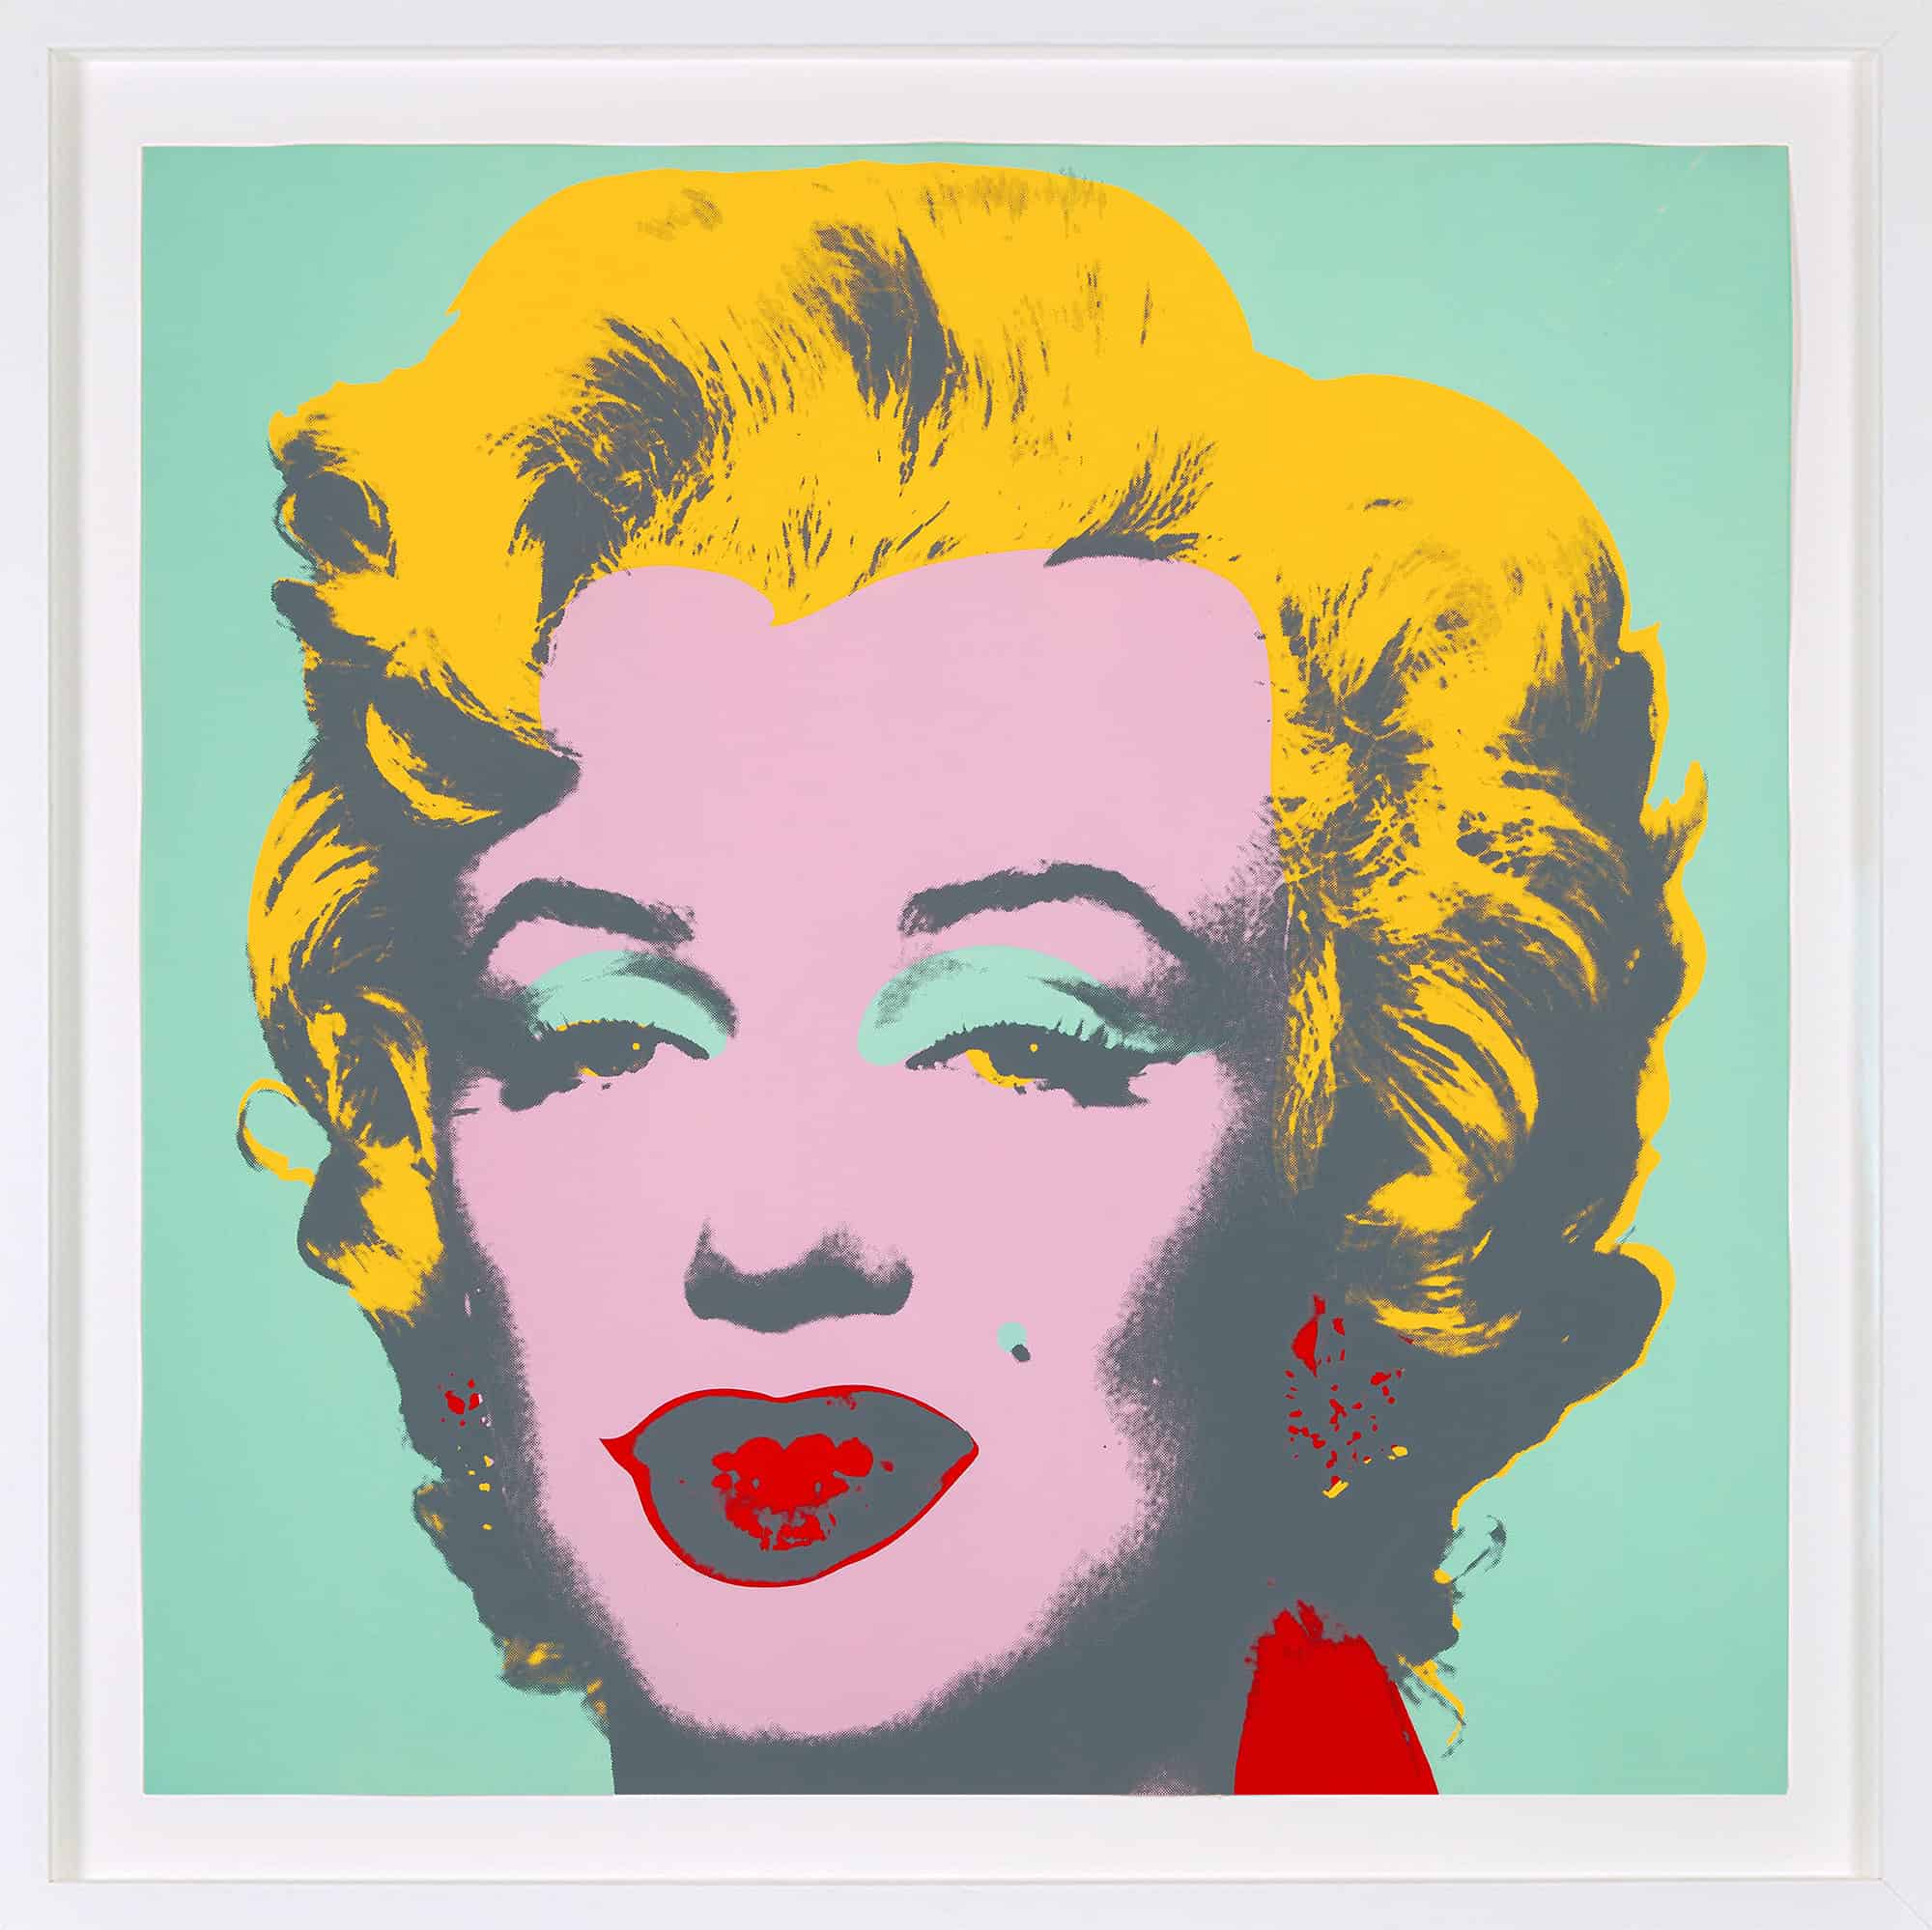 Andy Warhol, Marilyn Monroe (Marilyn), 1967, Screen Print (S)